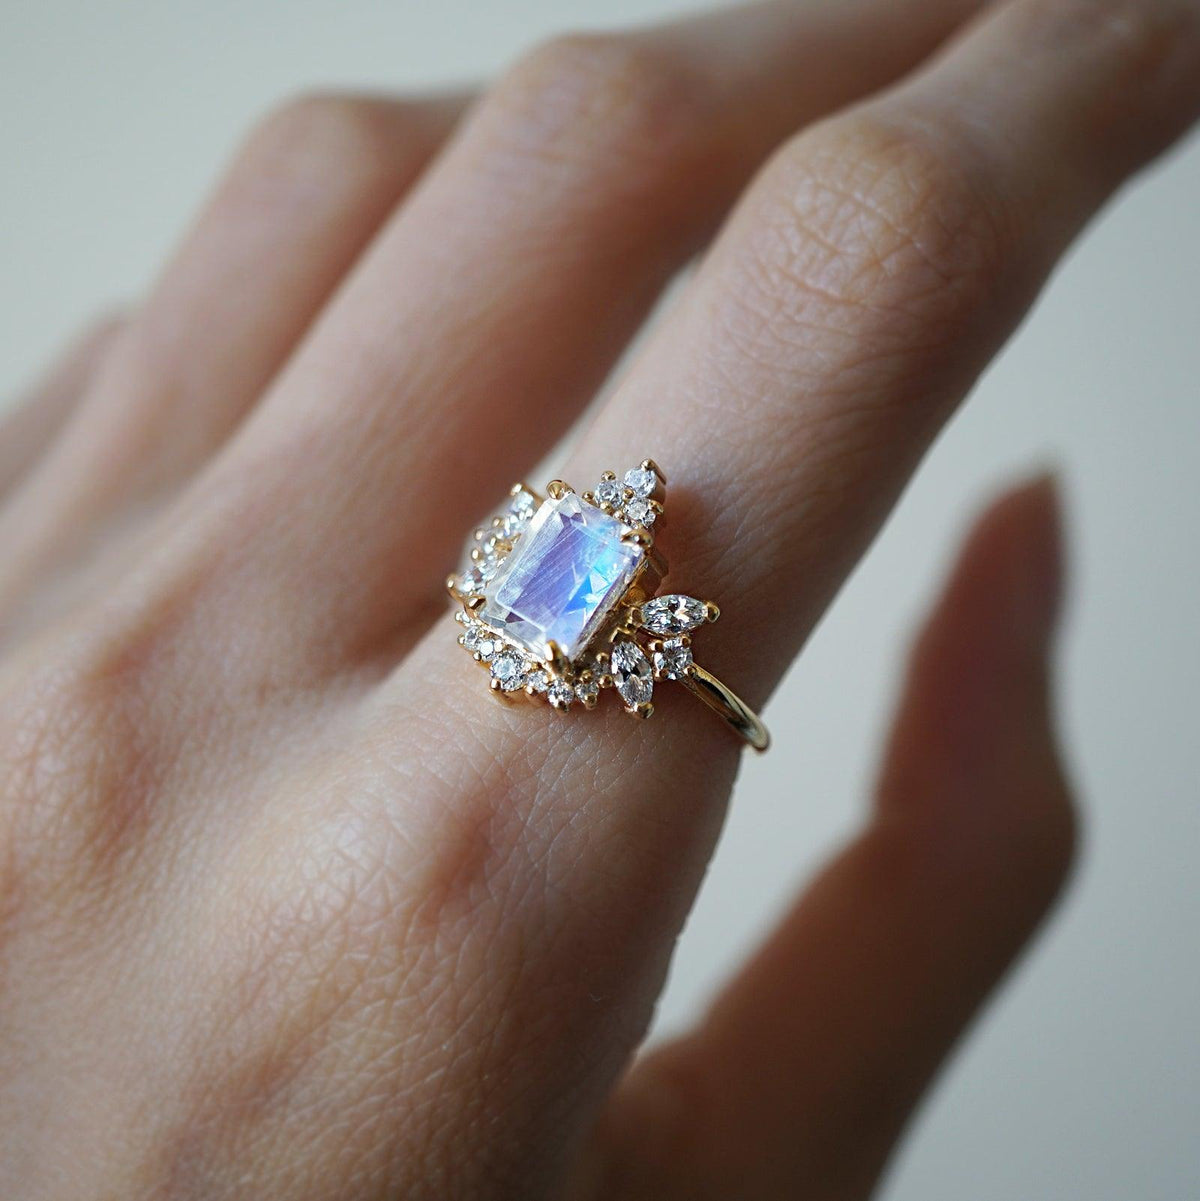 Stardust Moonstone Diamond Ring in 14K, 18K Gold and Platinum - Tippy Taste Jewelry